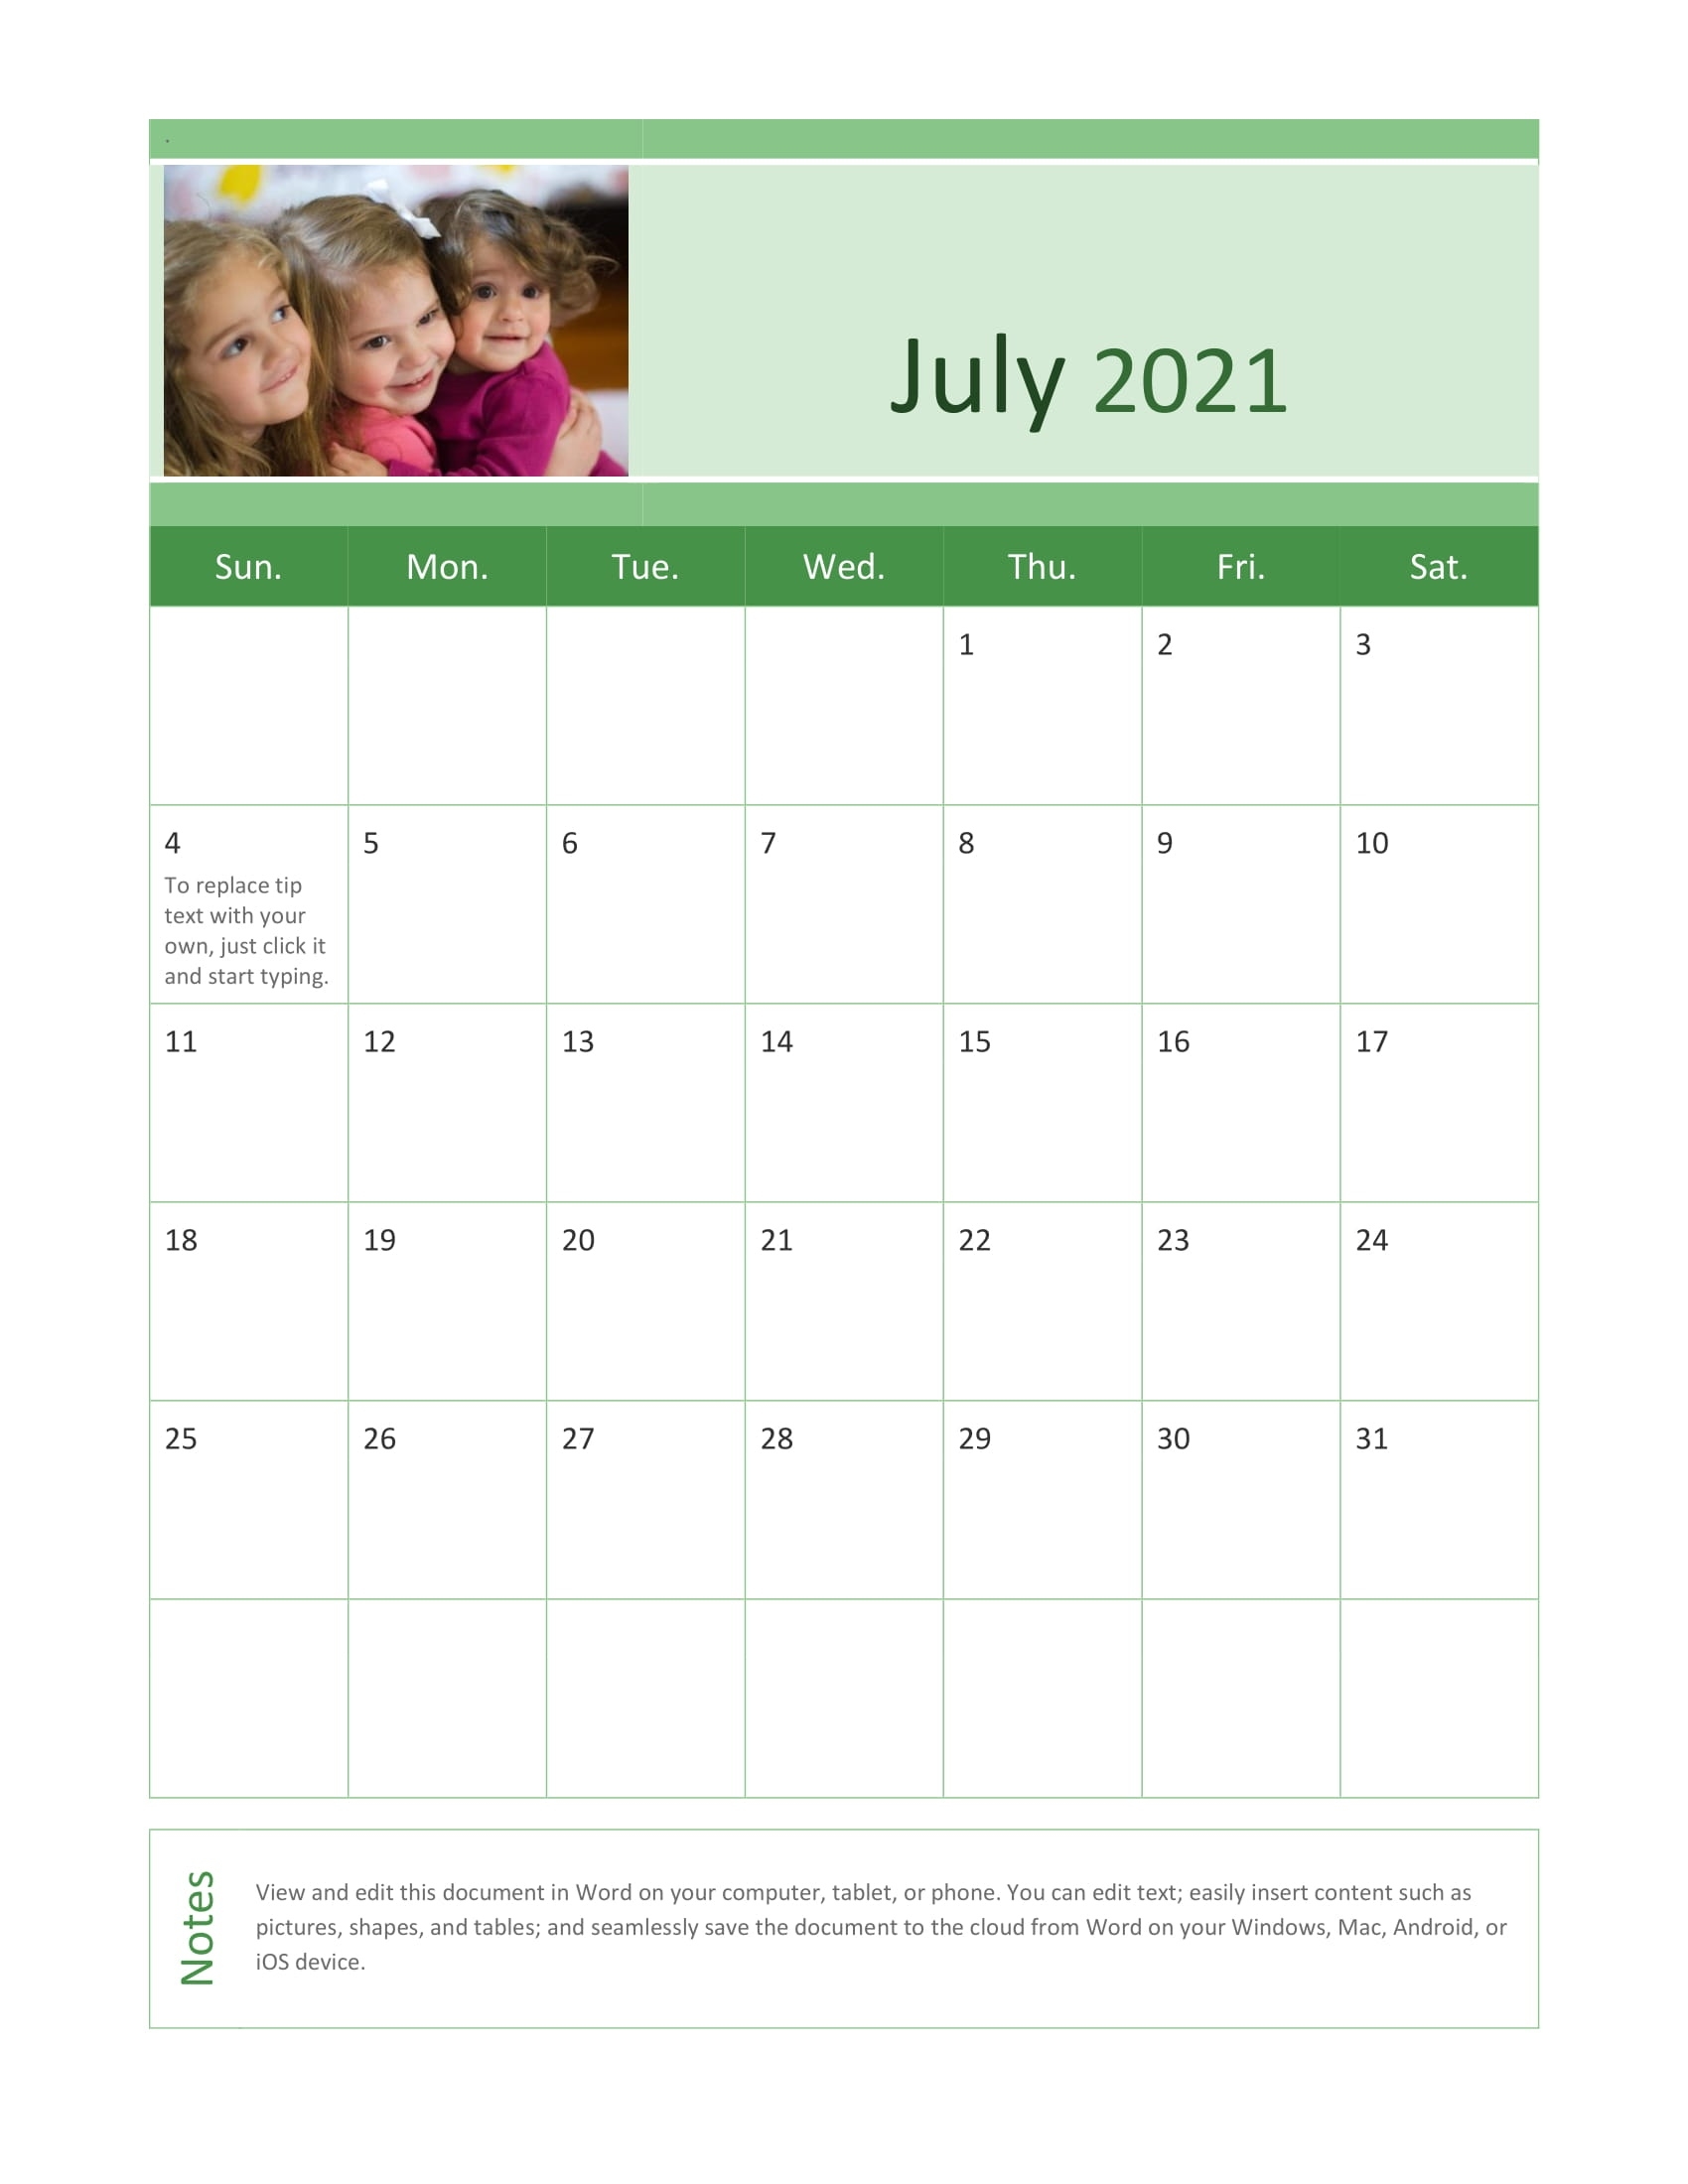 July 2021 Calendar Printable - Printable Calendar Template 2020 2021 July To December 2021 Calendar